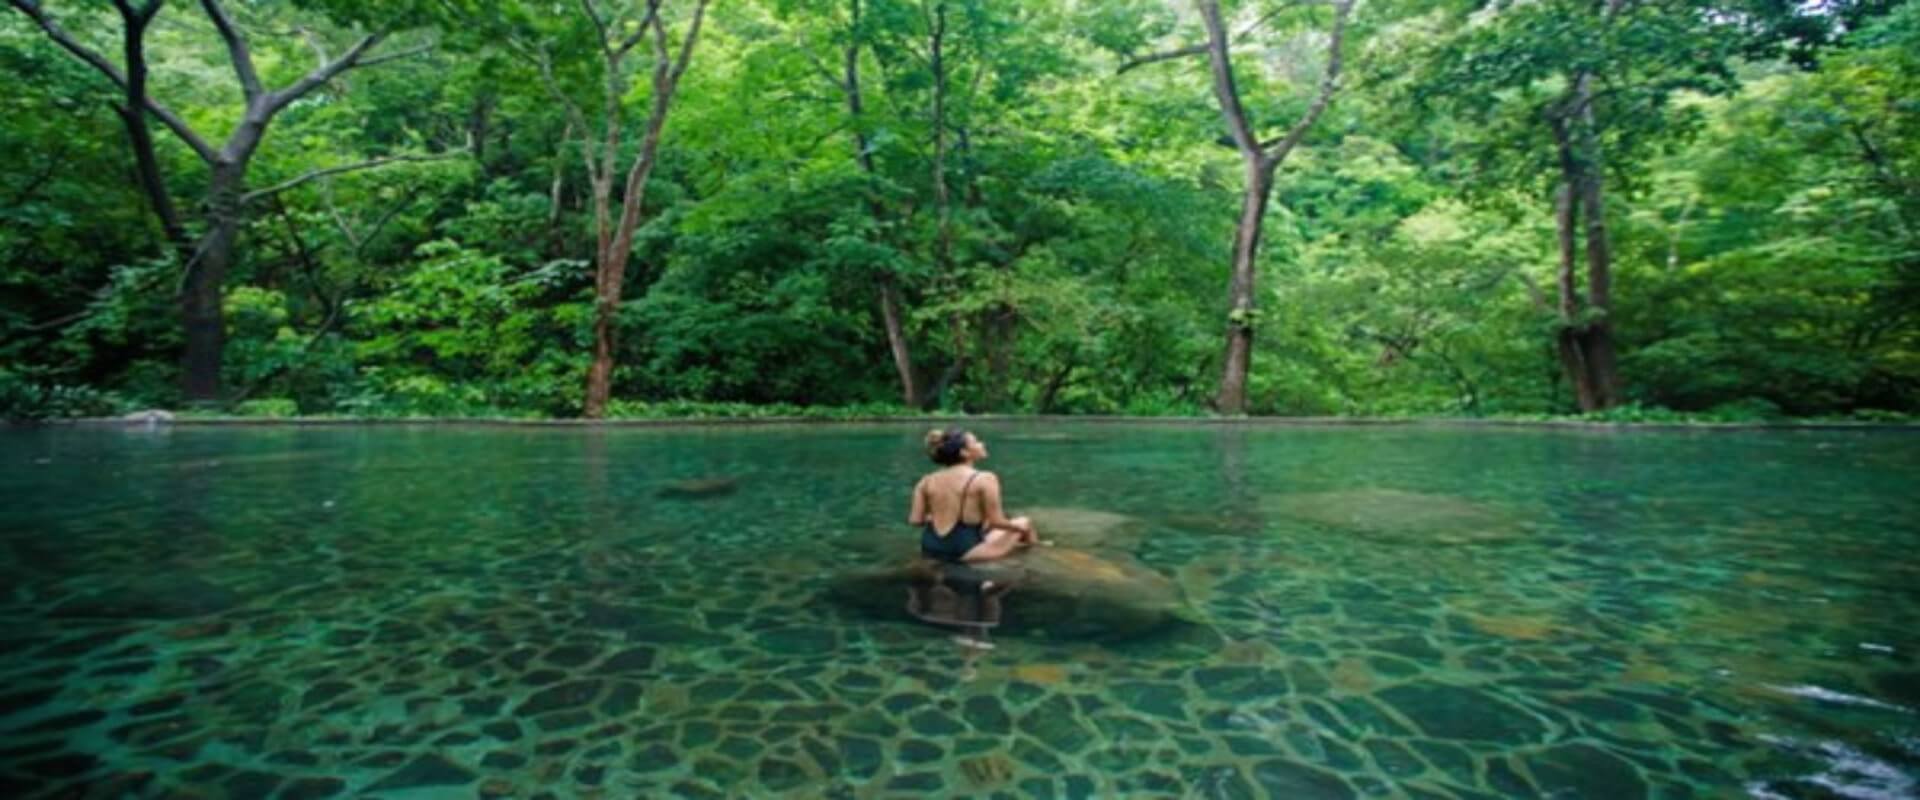 Vandara Hot Springs and Adventure Tour  | Costa Rica Jade Tours